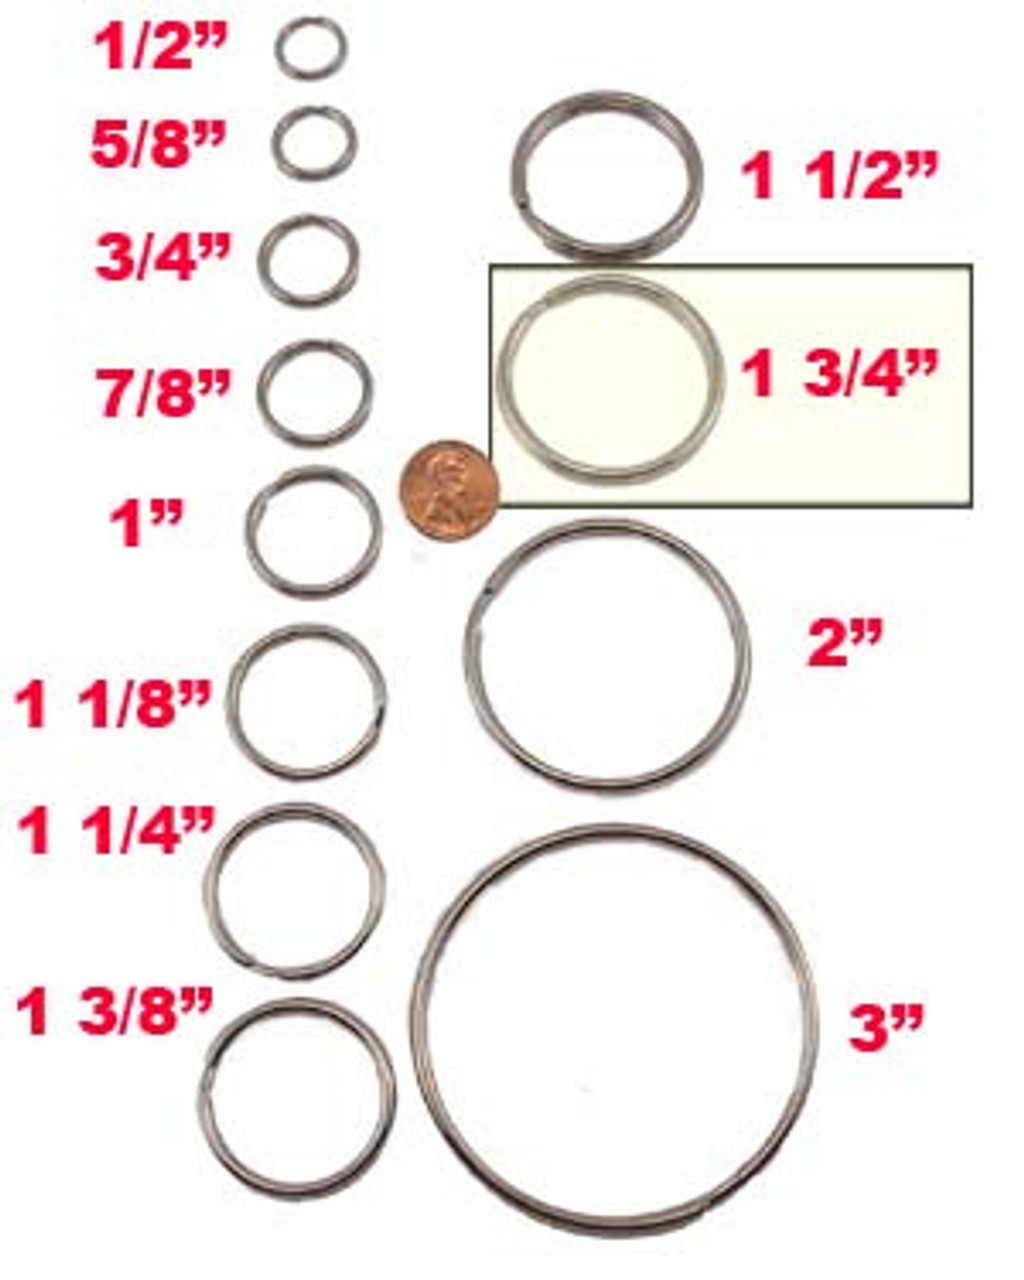  Lot of 10 Big Heart Shaped Steel Split Rings Keyring Ring For  Keys Purses + (Nickel Plated) : Arts, Crafts & Sewing